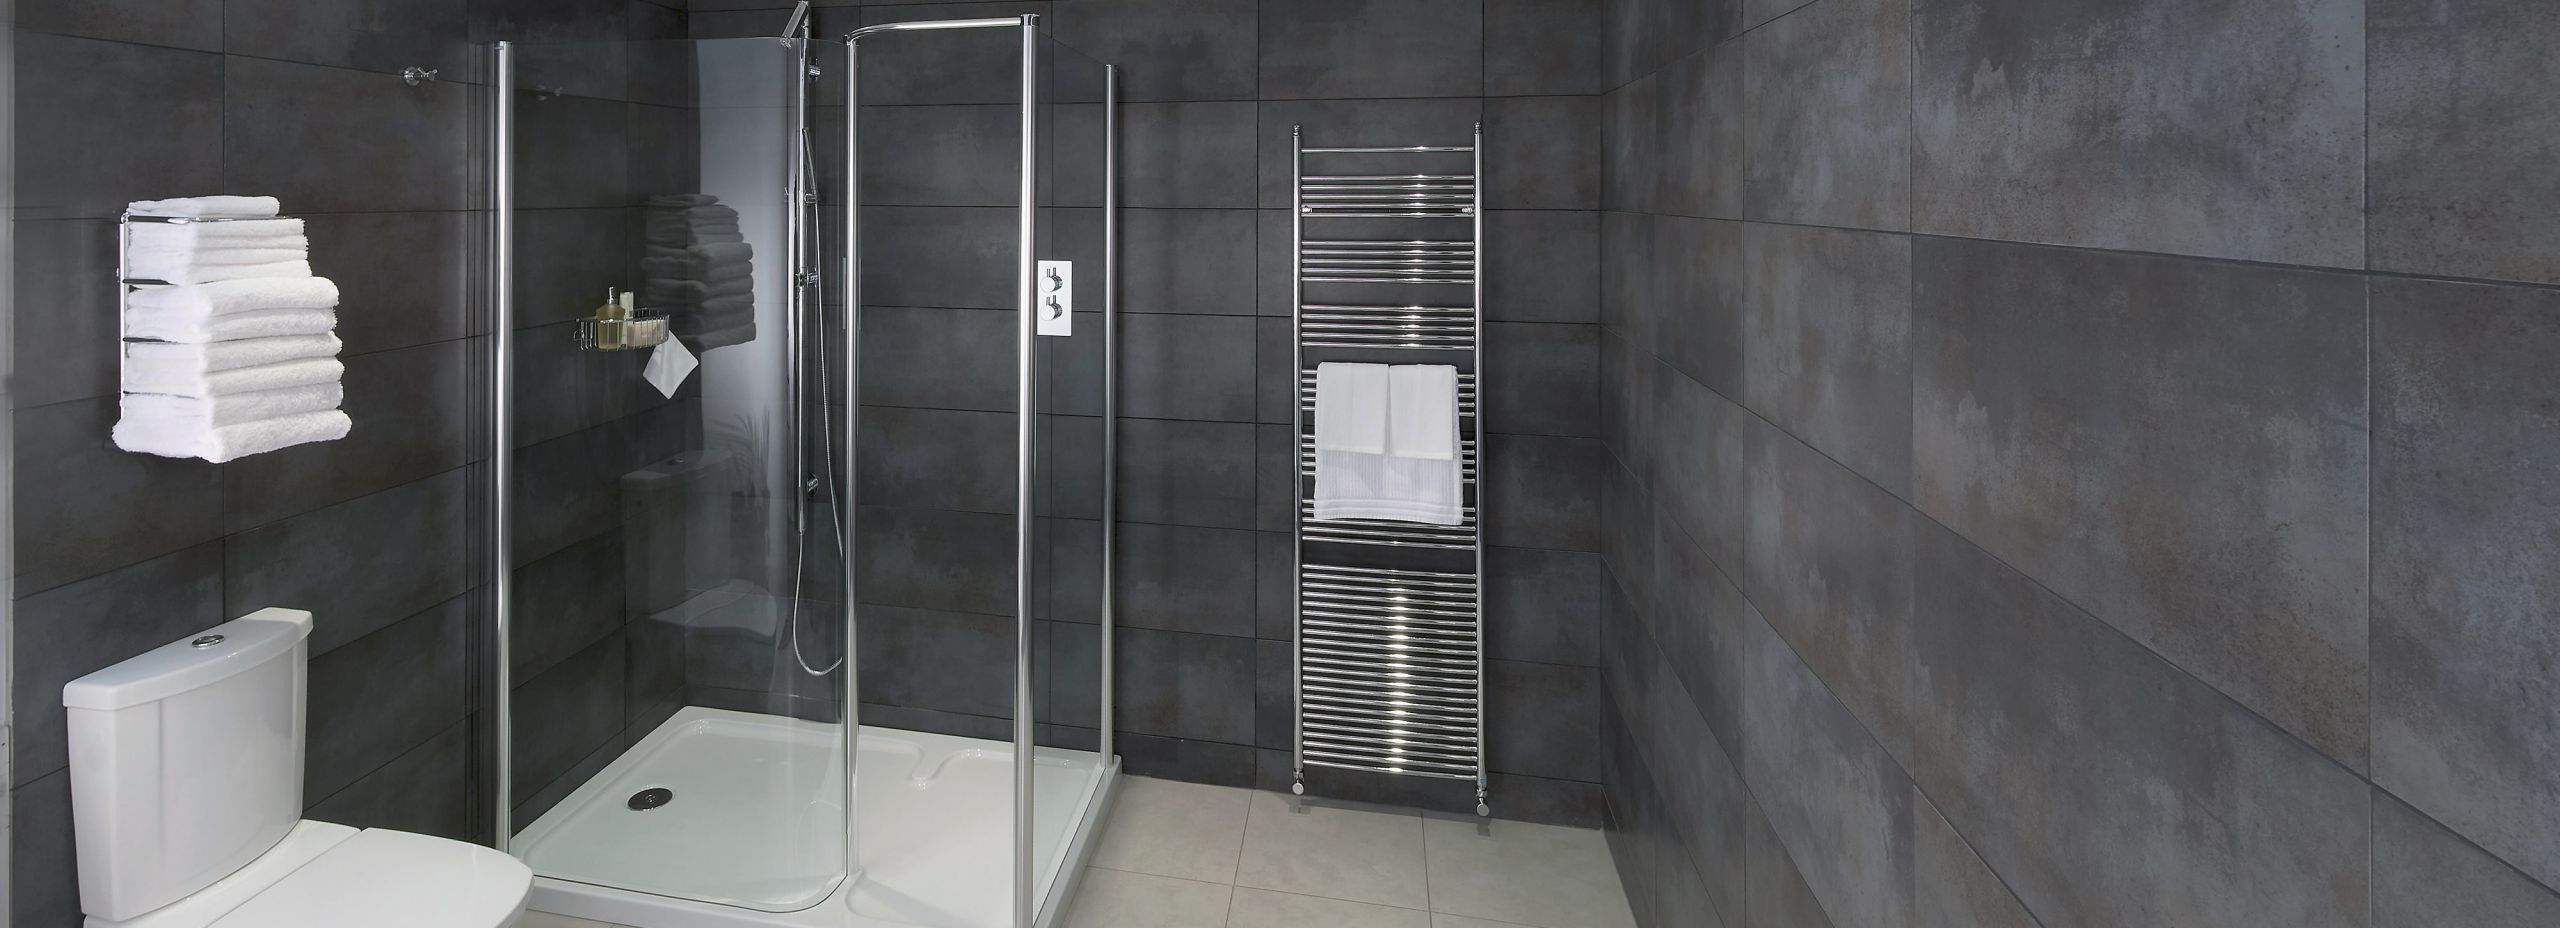 Bathroom Shower Images
 Shower Room Design and Installation Surrey Raycross